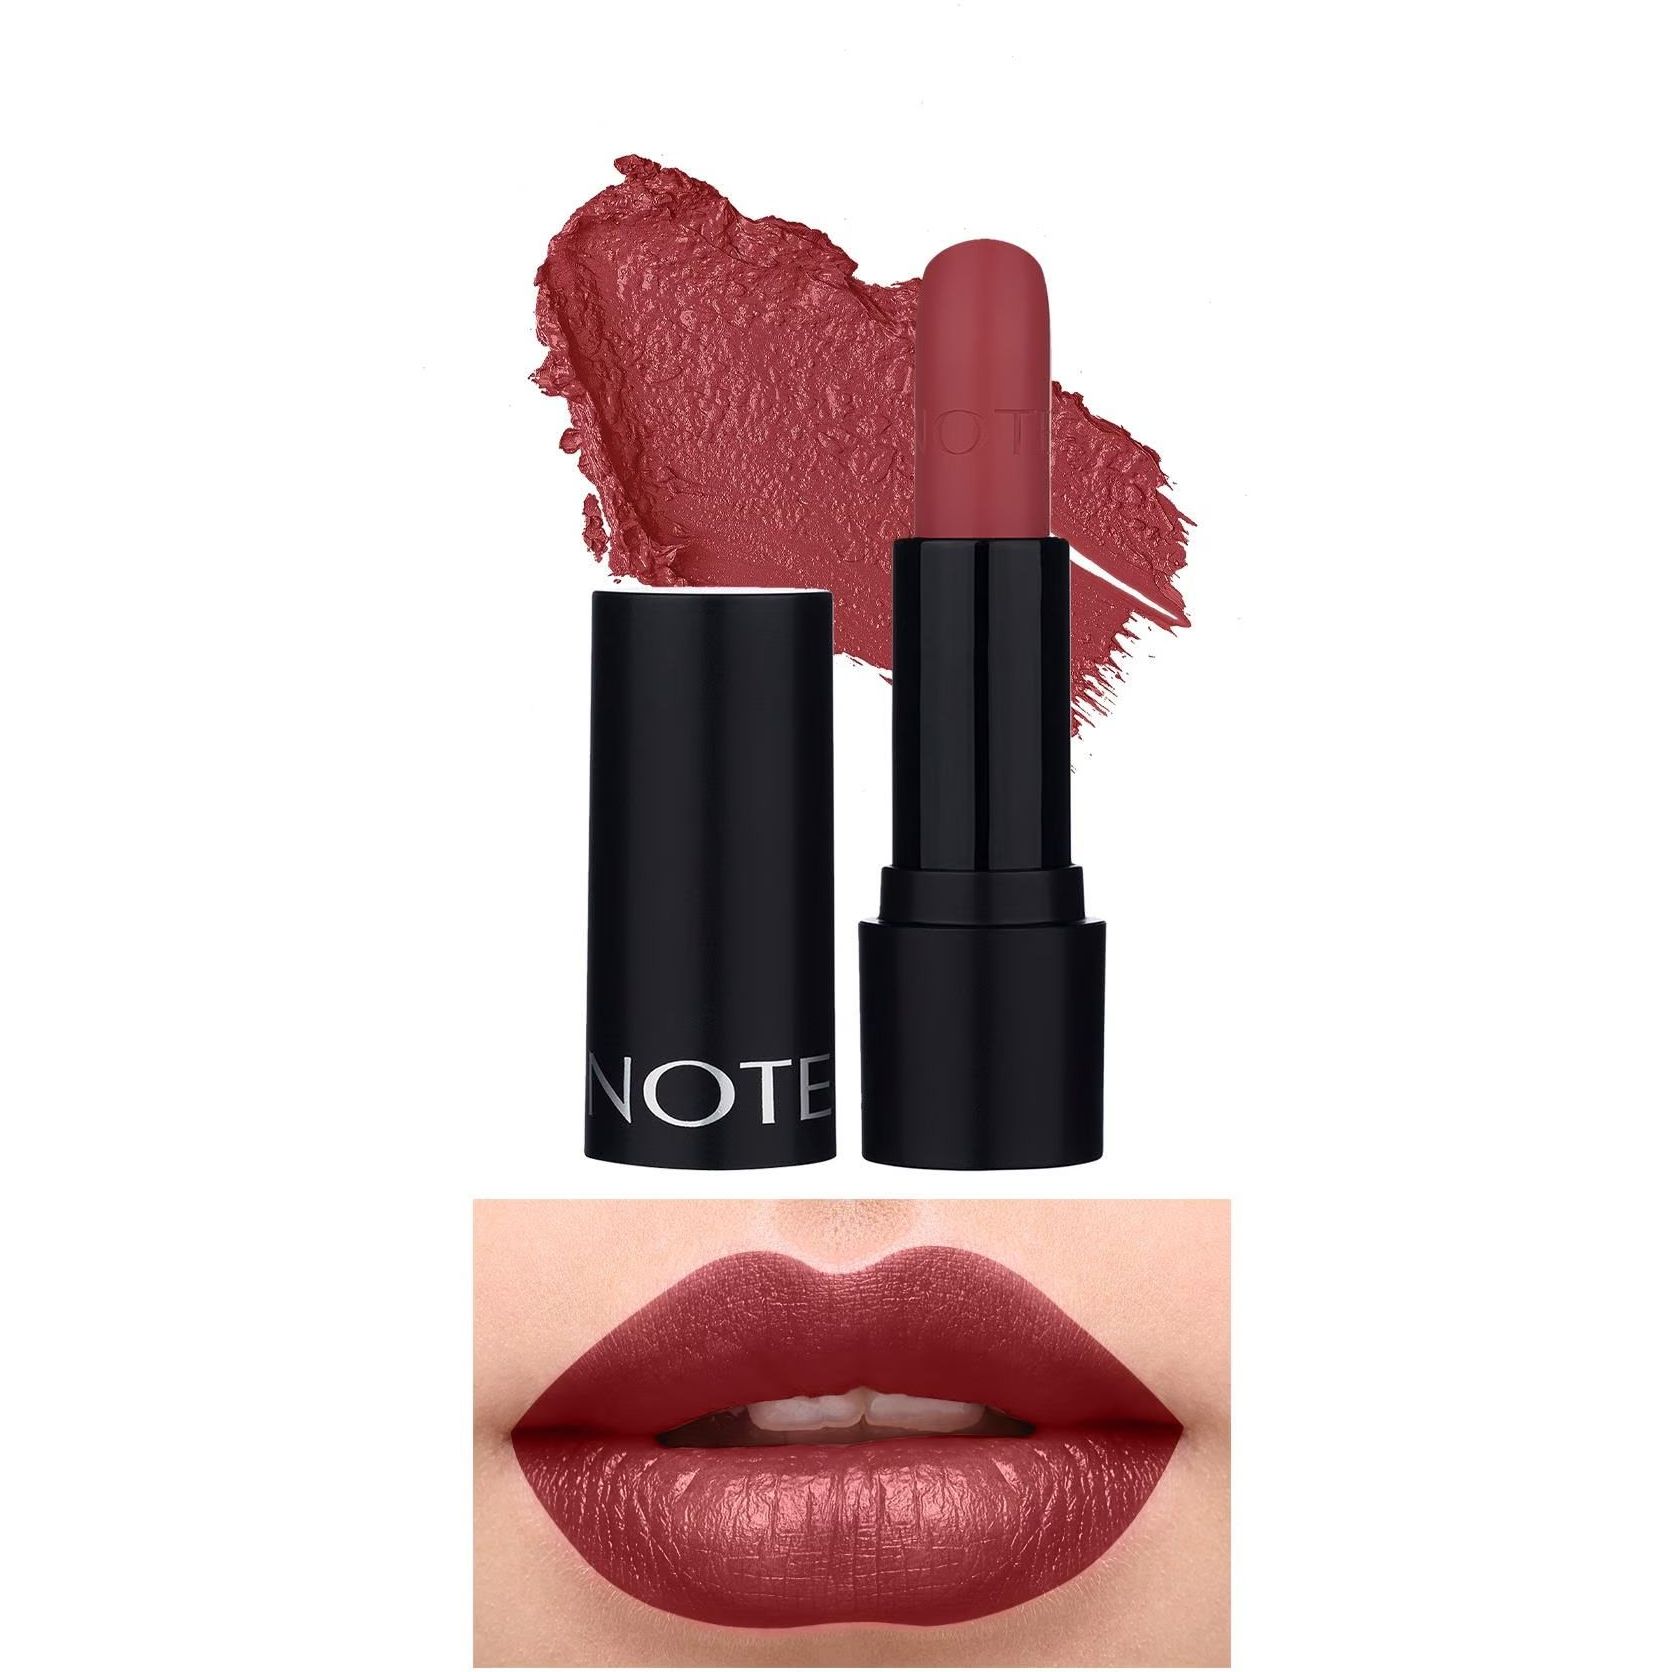 Помада для губ Note Cosmetique Deep Impact Lipstick тон 04 (Terracotta) 4.5 г - фото 4